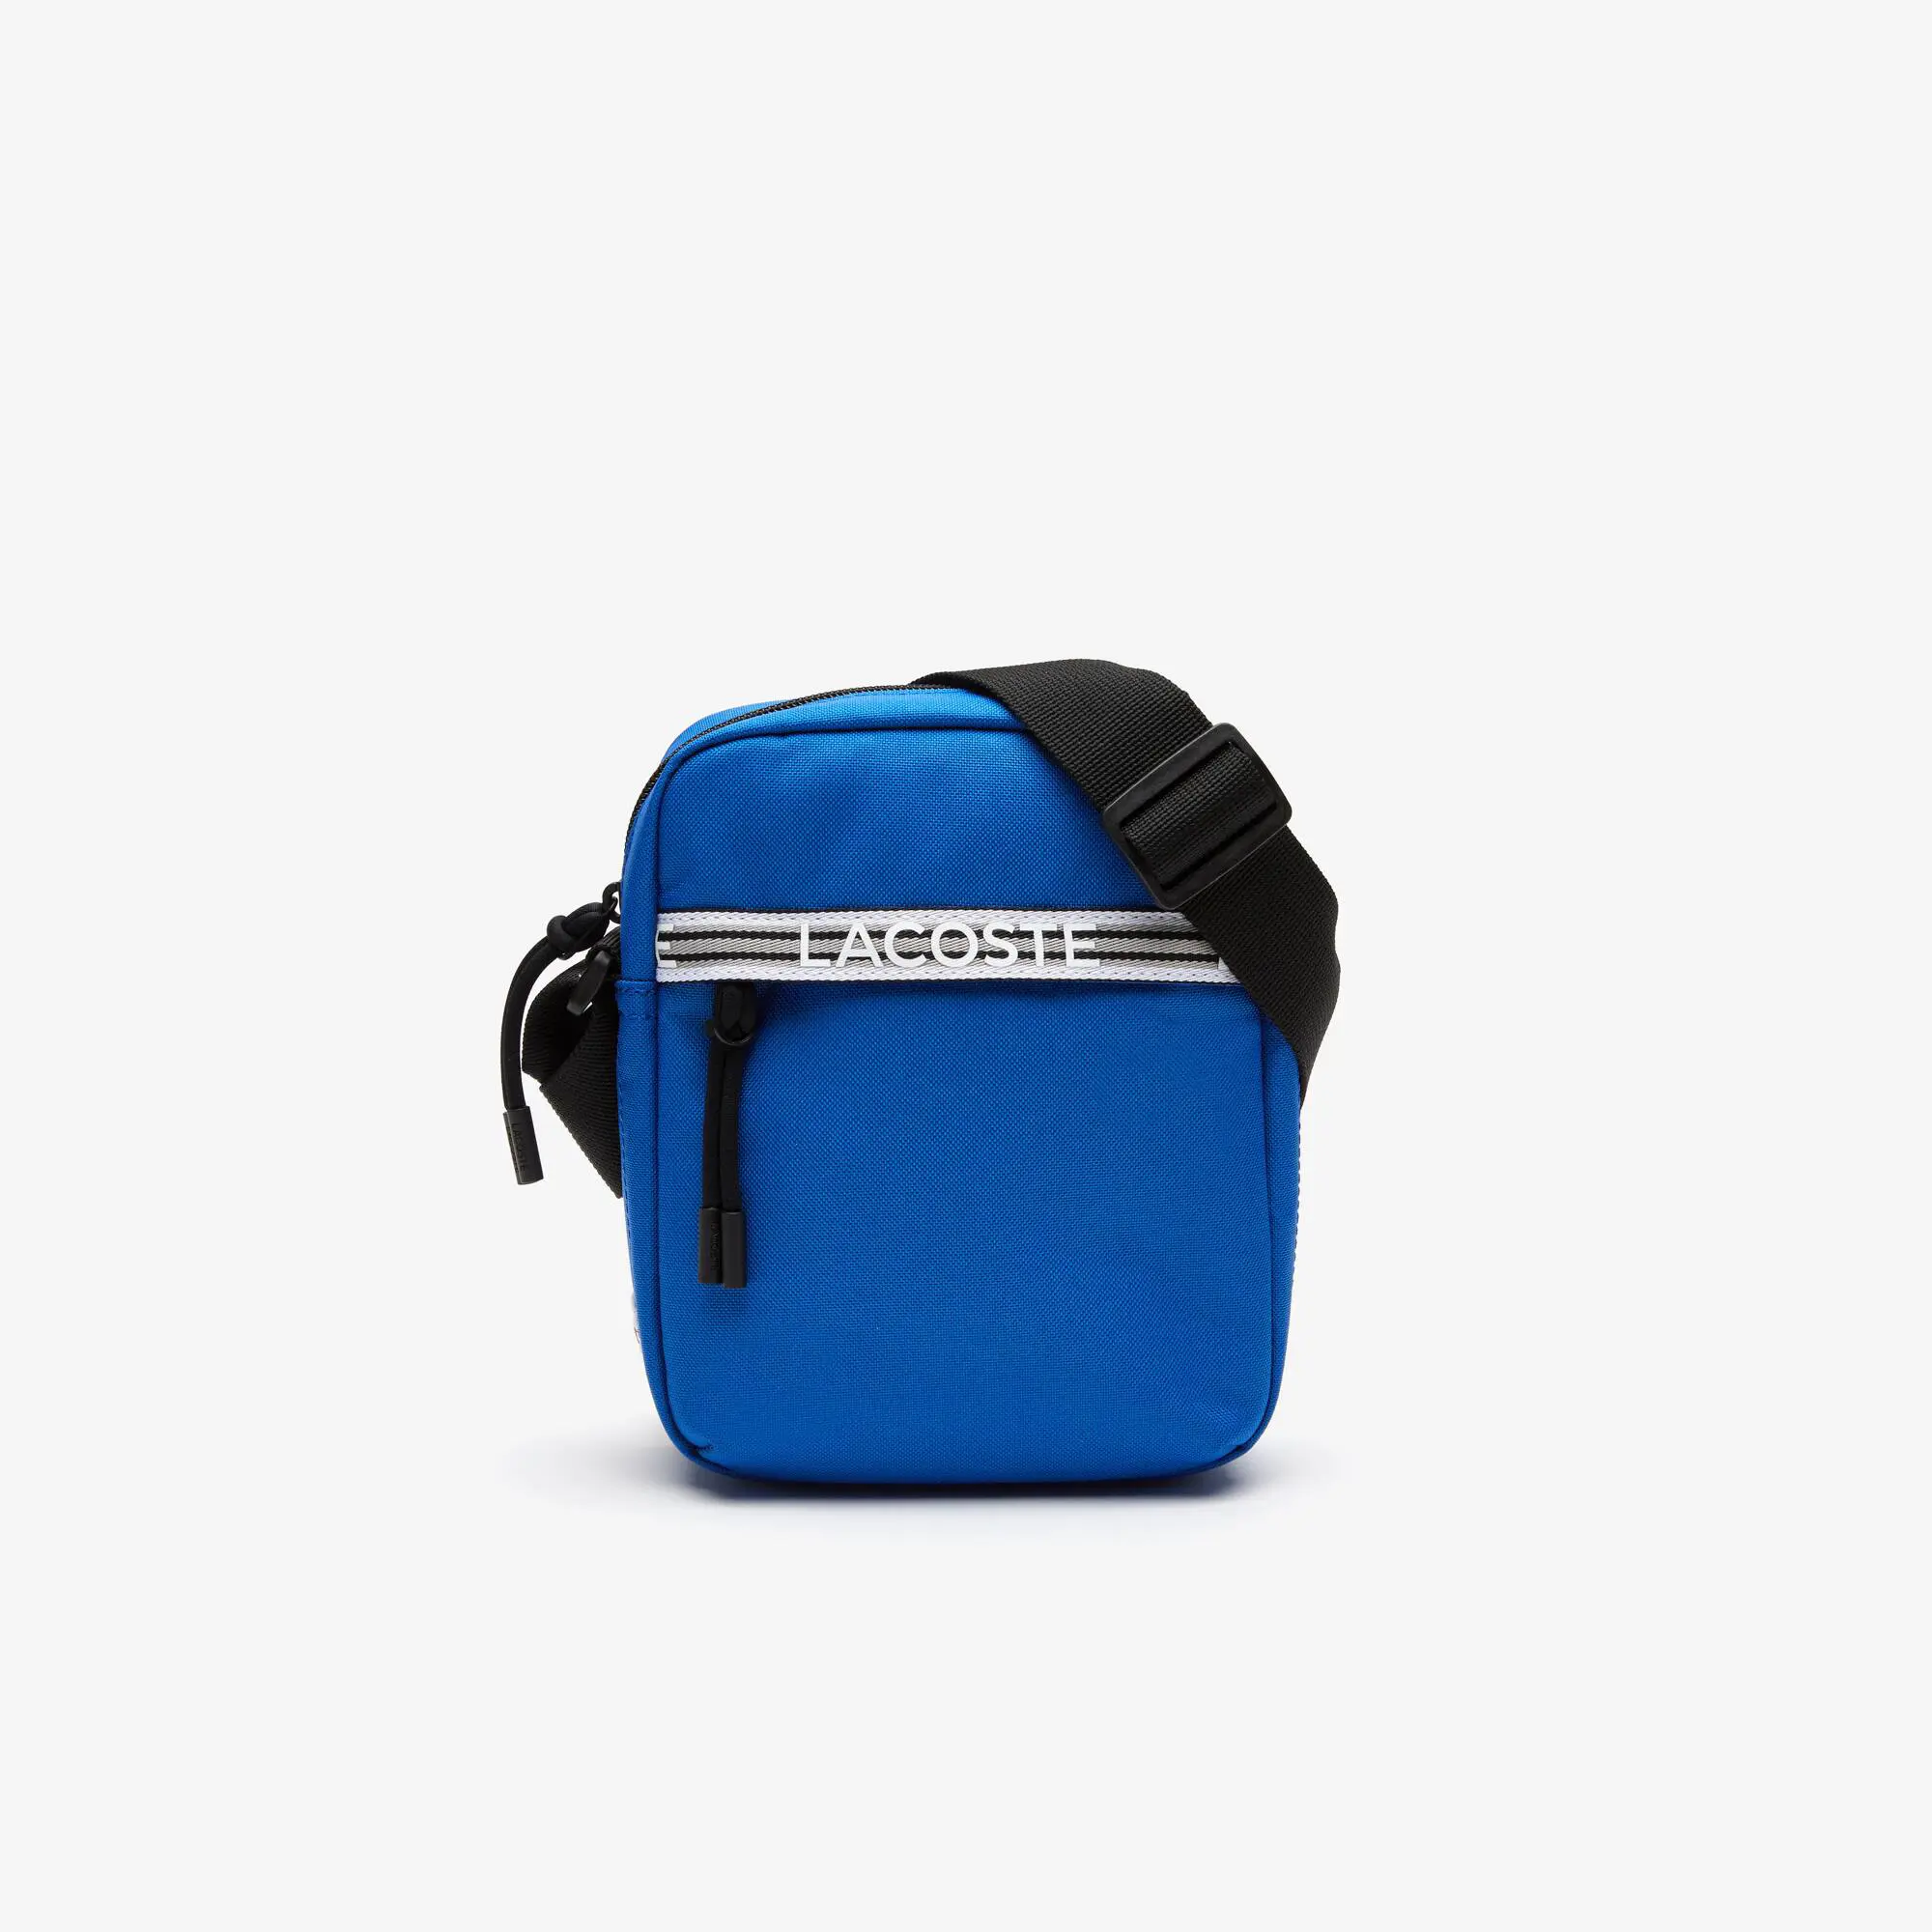 Lacoste Men’s Lacoste Neocroc Recycled Fiber Vertical Messenger Bag. 2